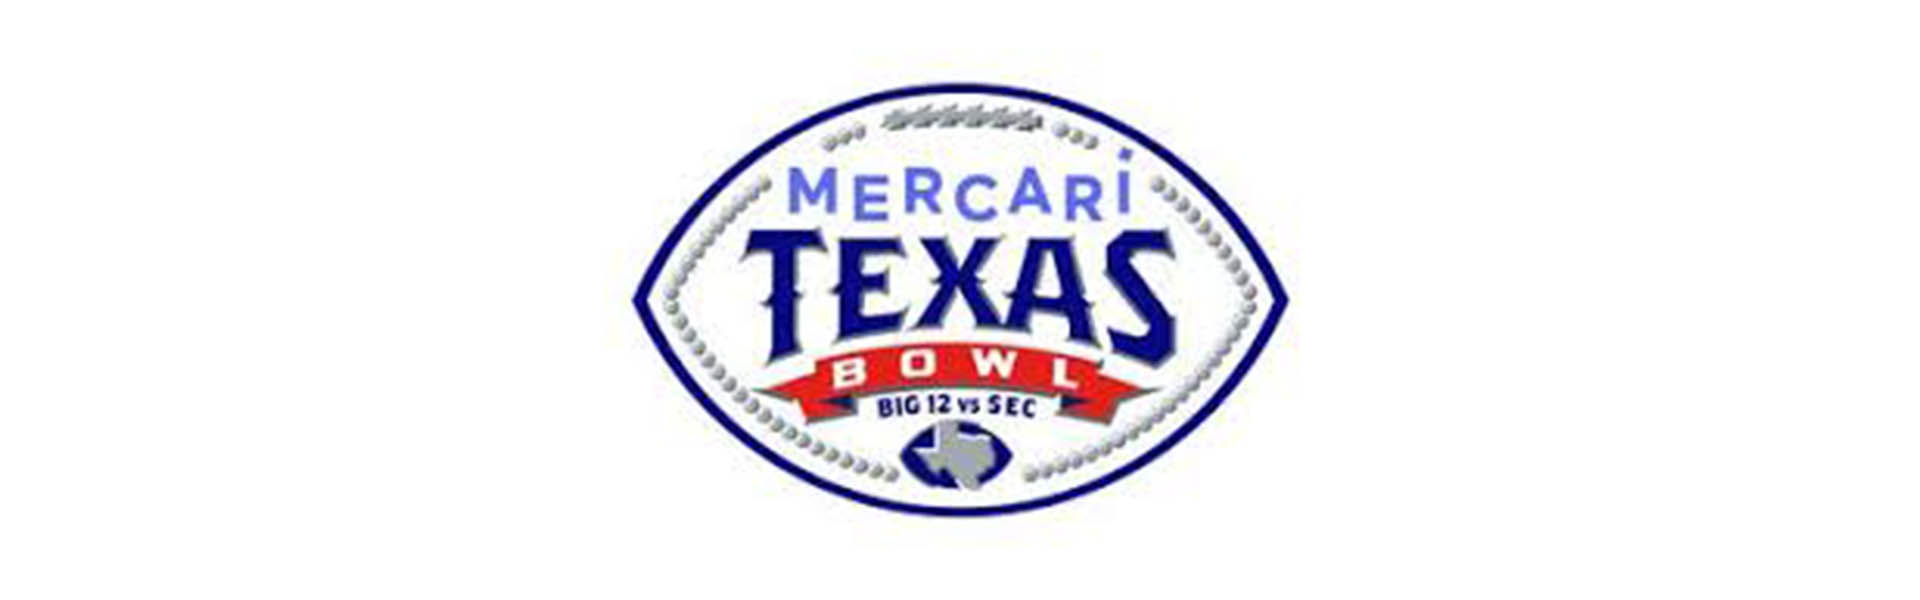 Mercari Texas Bowl NRG Park